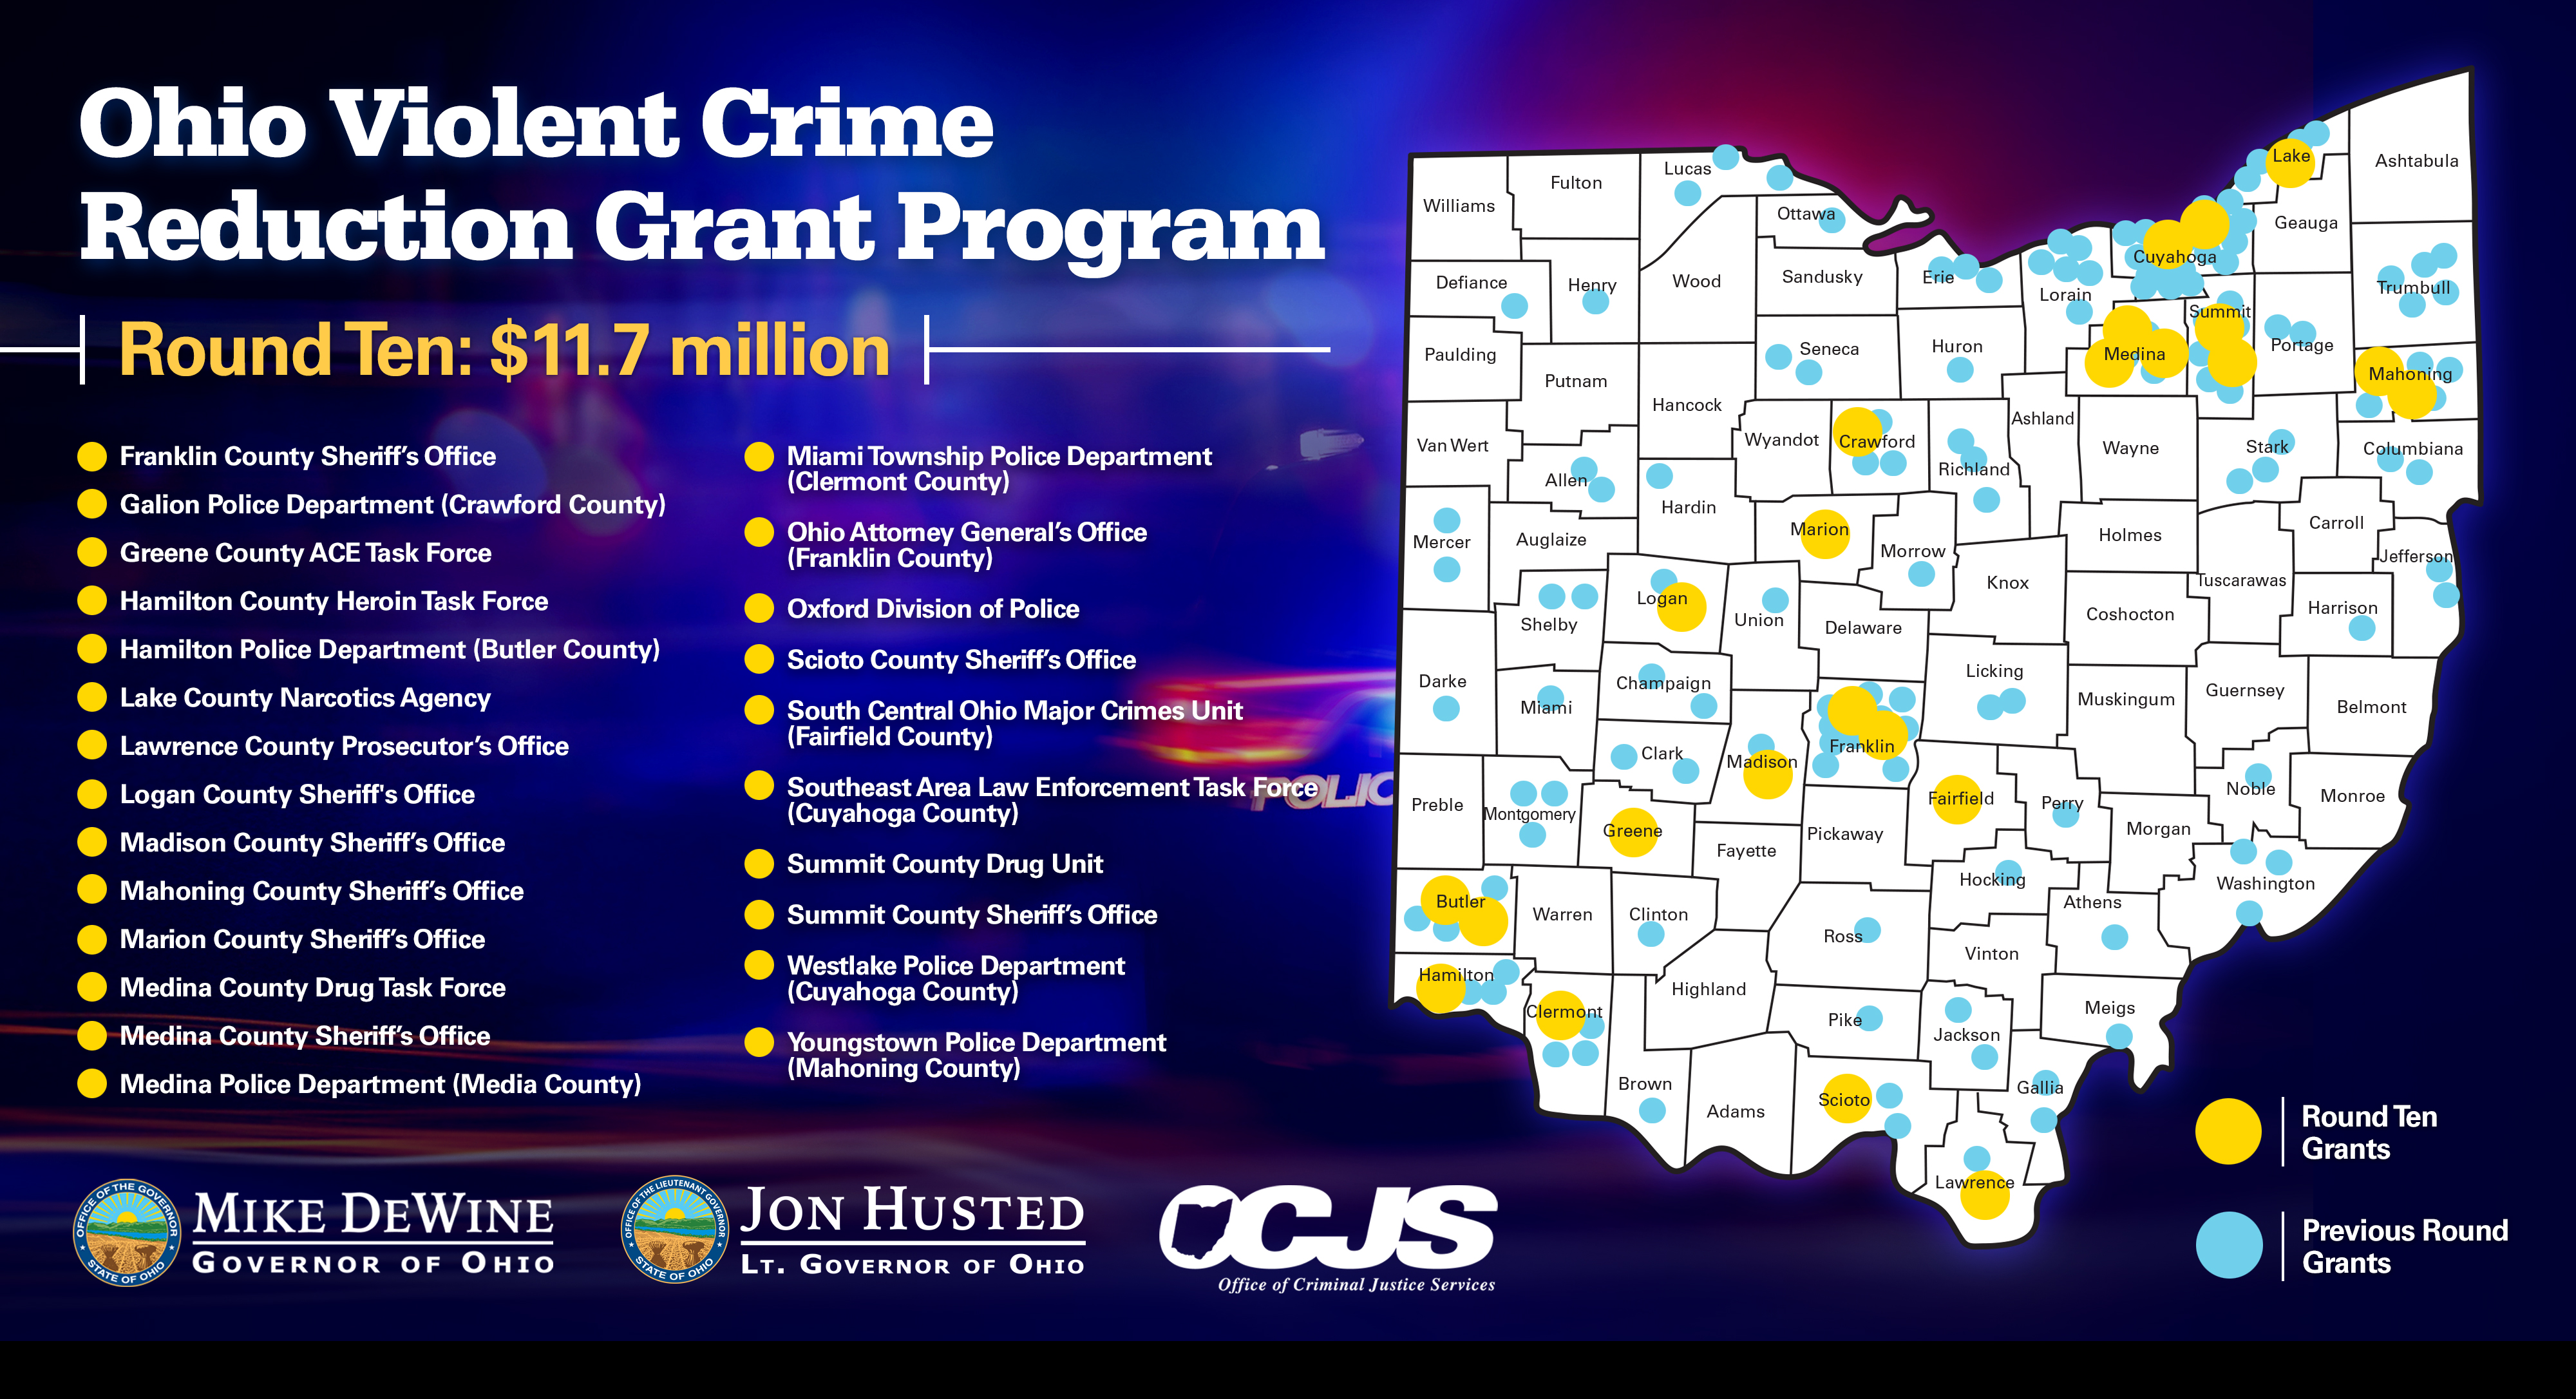 2022 Ohio State crime report shows decrease in overall crime, but